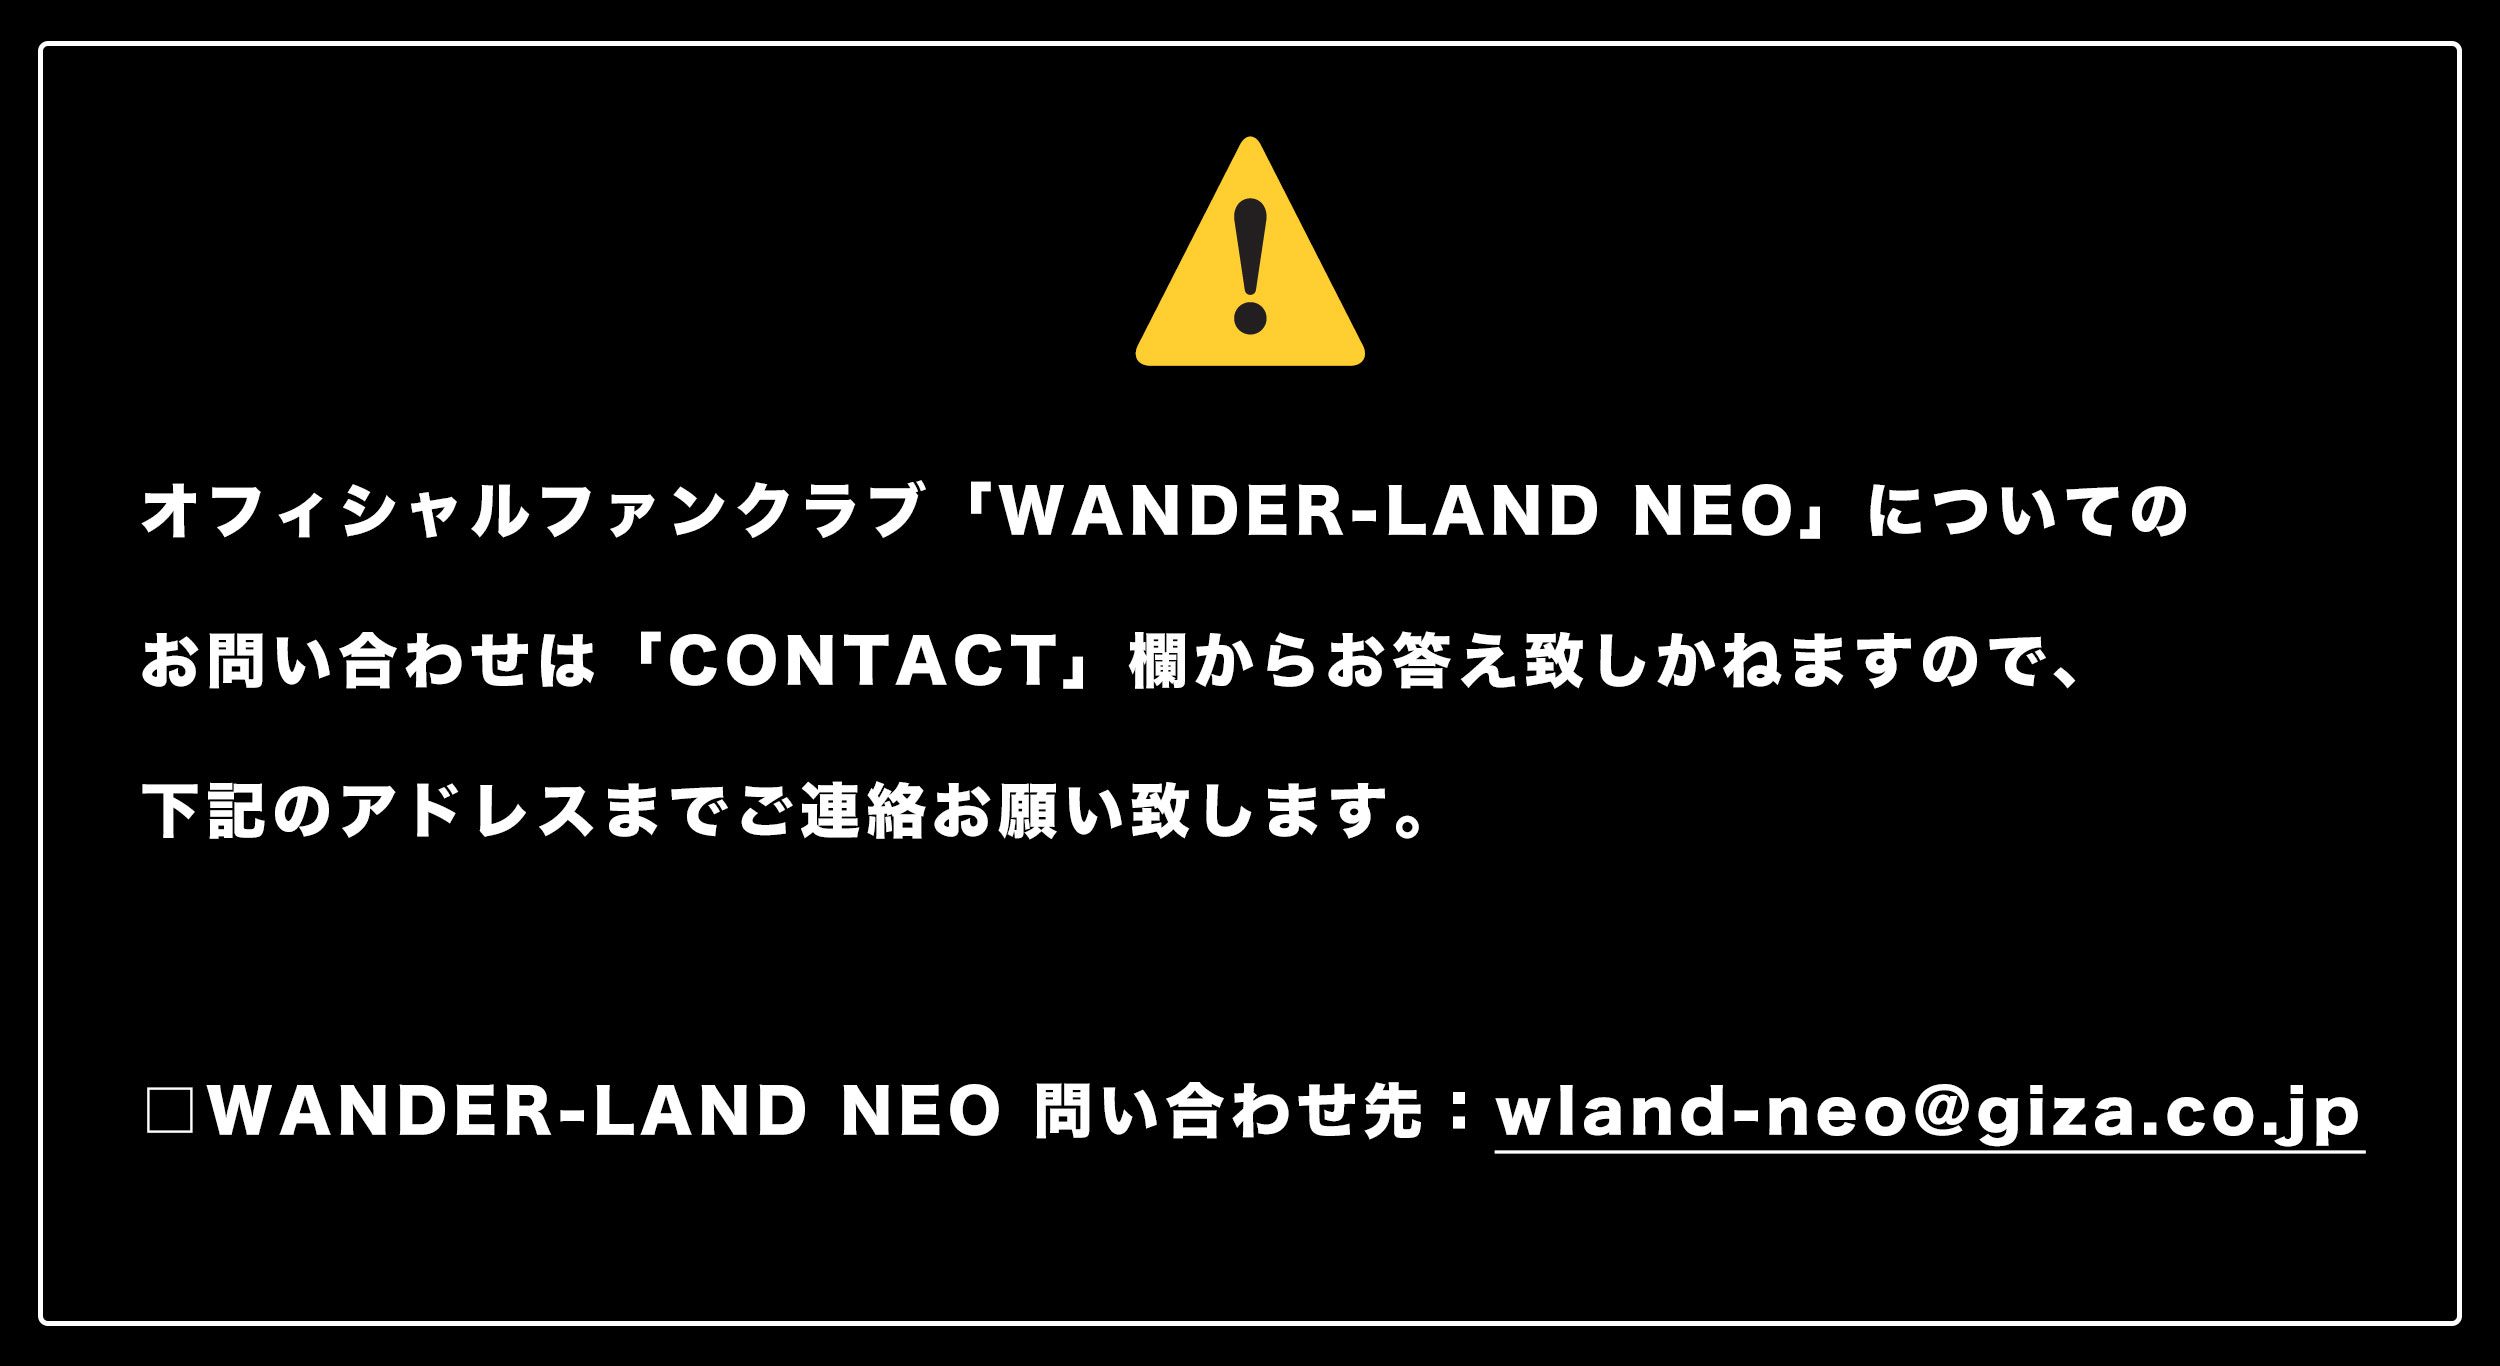 WANDER-LAND NEO 問い合わせ先